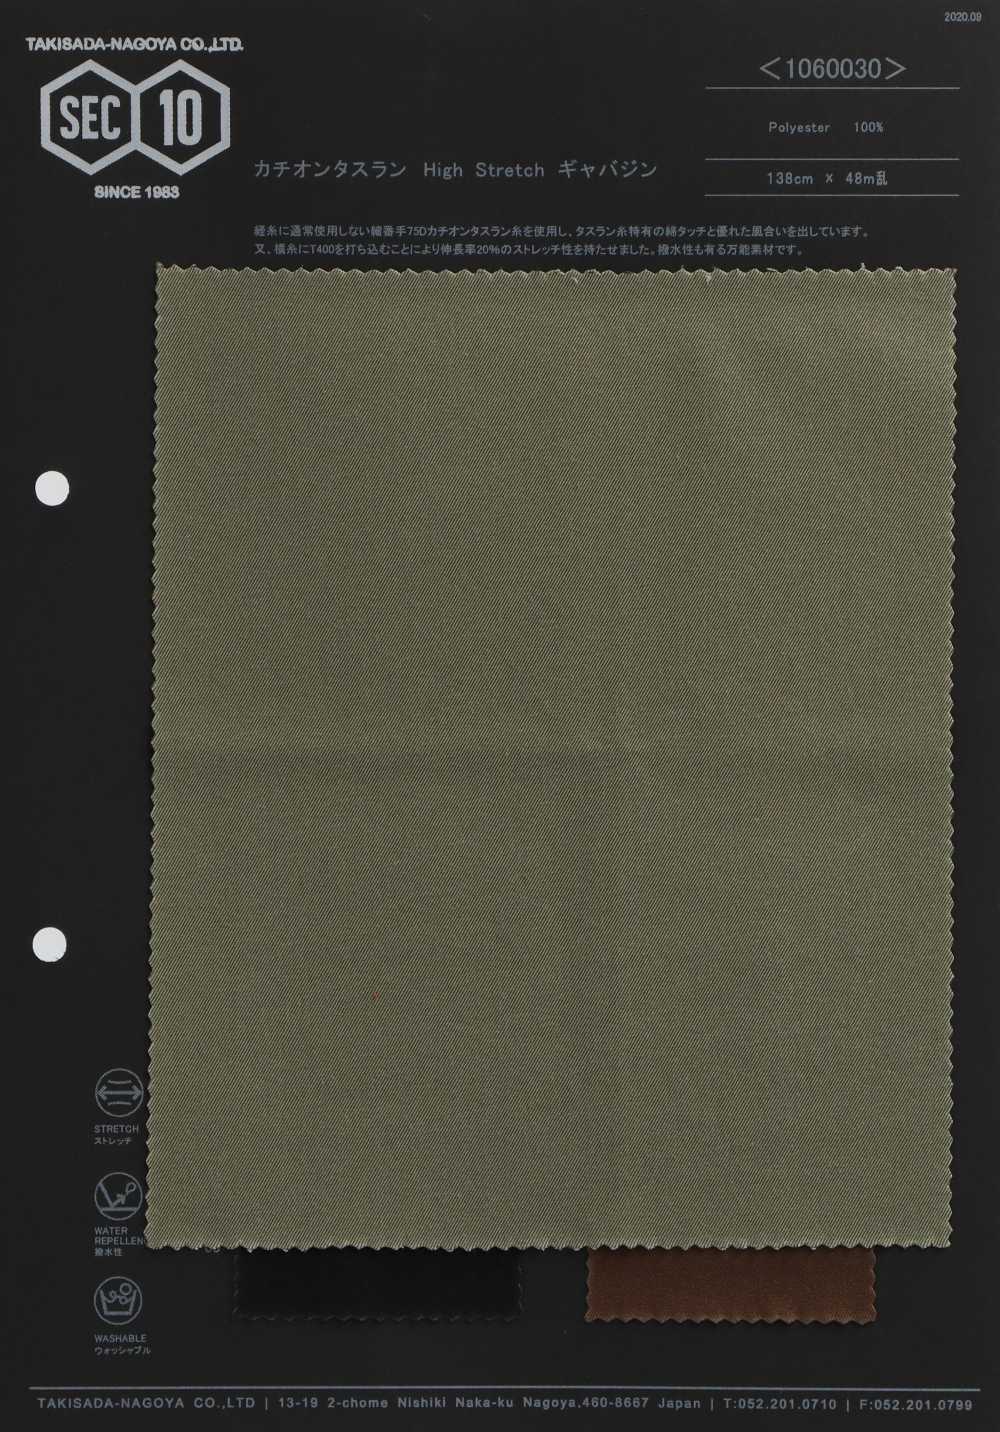 1060030 Cation Taslan High Stretch Gabardine[Textile / Fabric] Takisada Nagoya